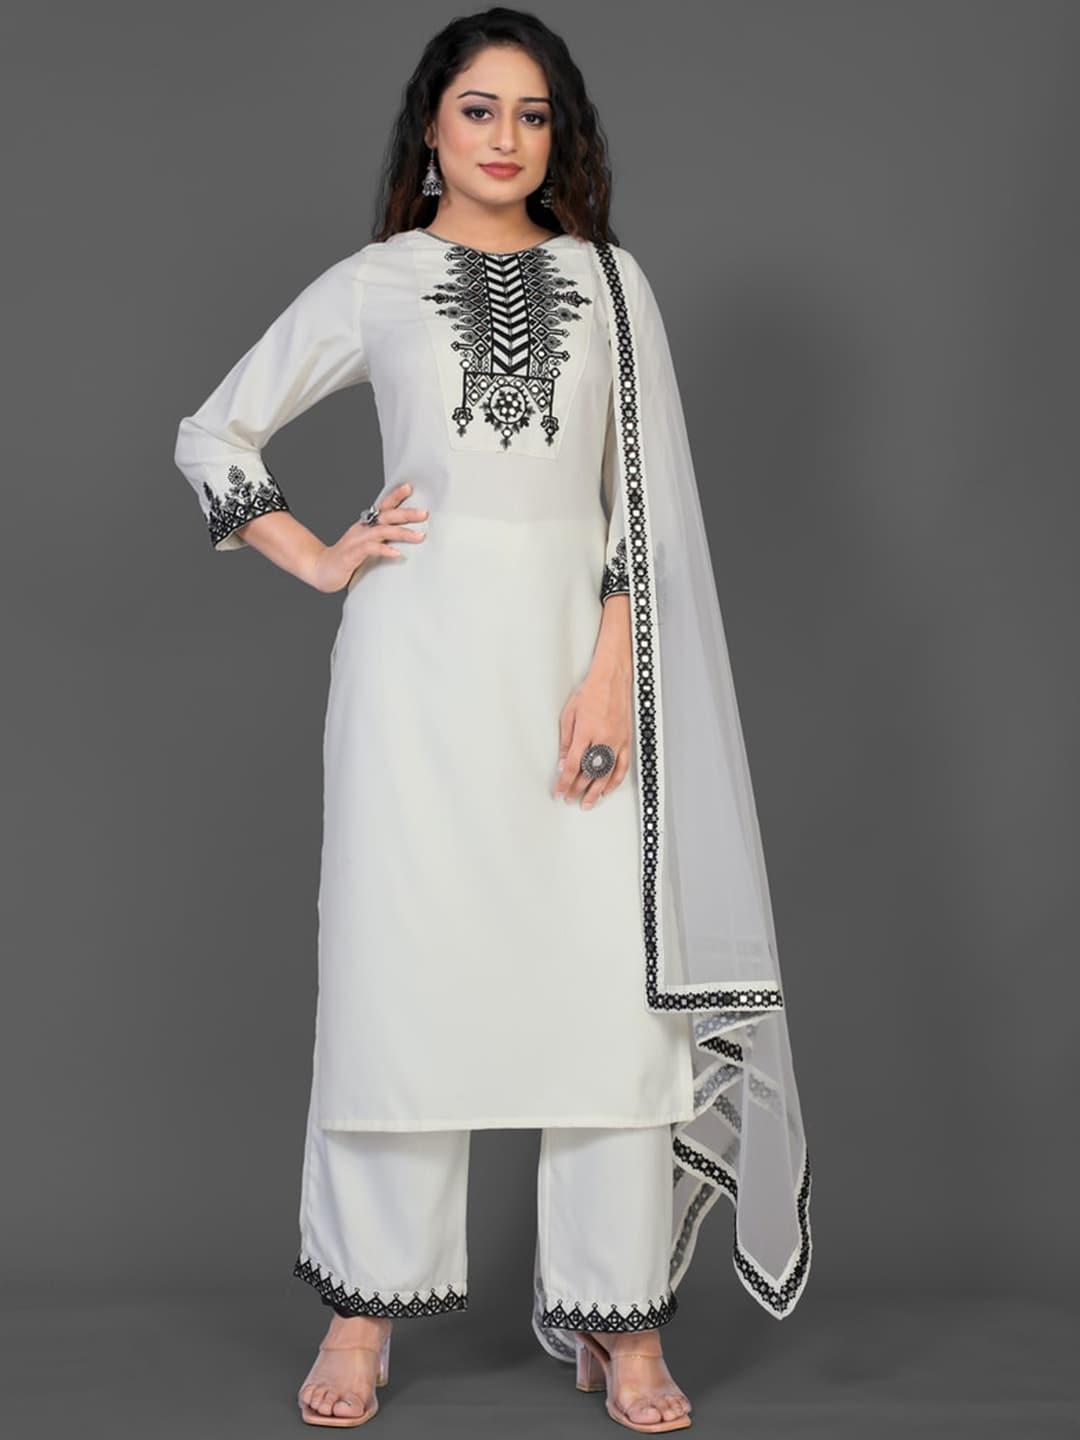 jinax women off white floral embroidered regular kurti with pyjamas & with dupatta